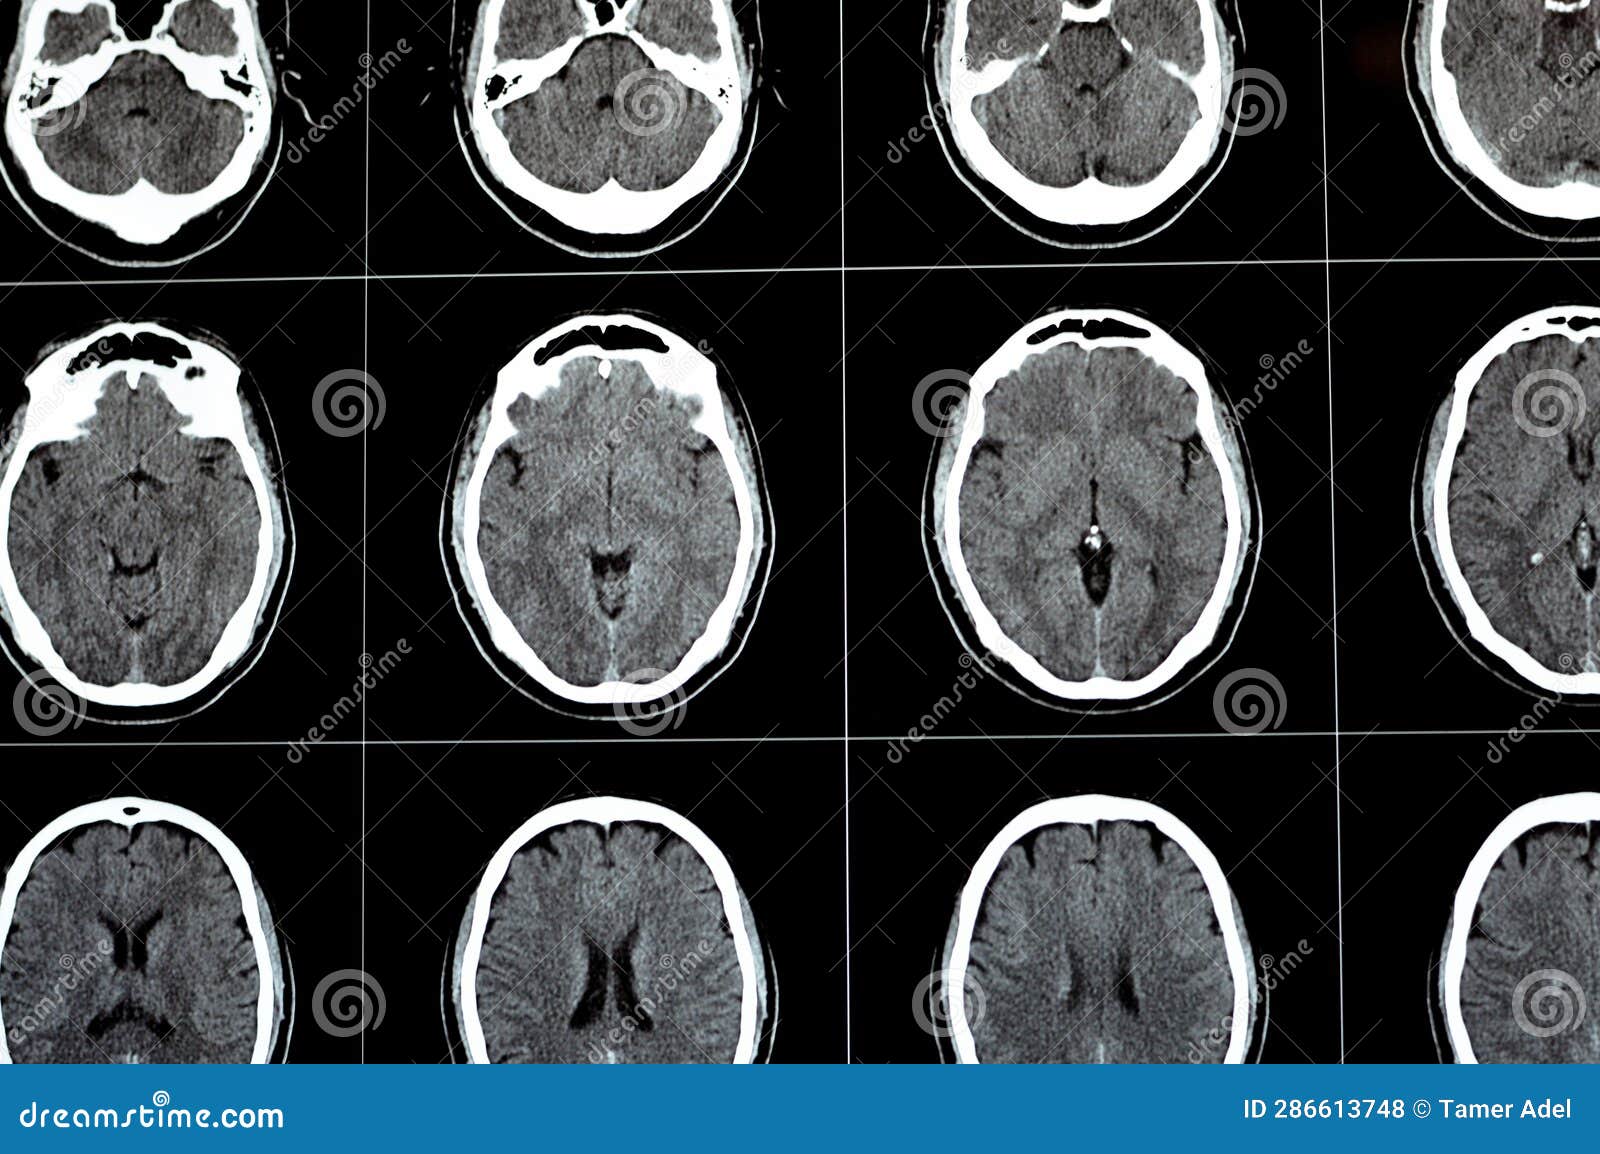 brain ct scan showing brainstem cavernoma, right centrum semiovale developmental venous anomaly, intra cerebral haematoma, faint